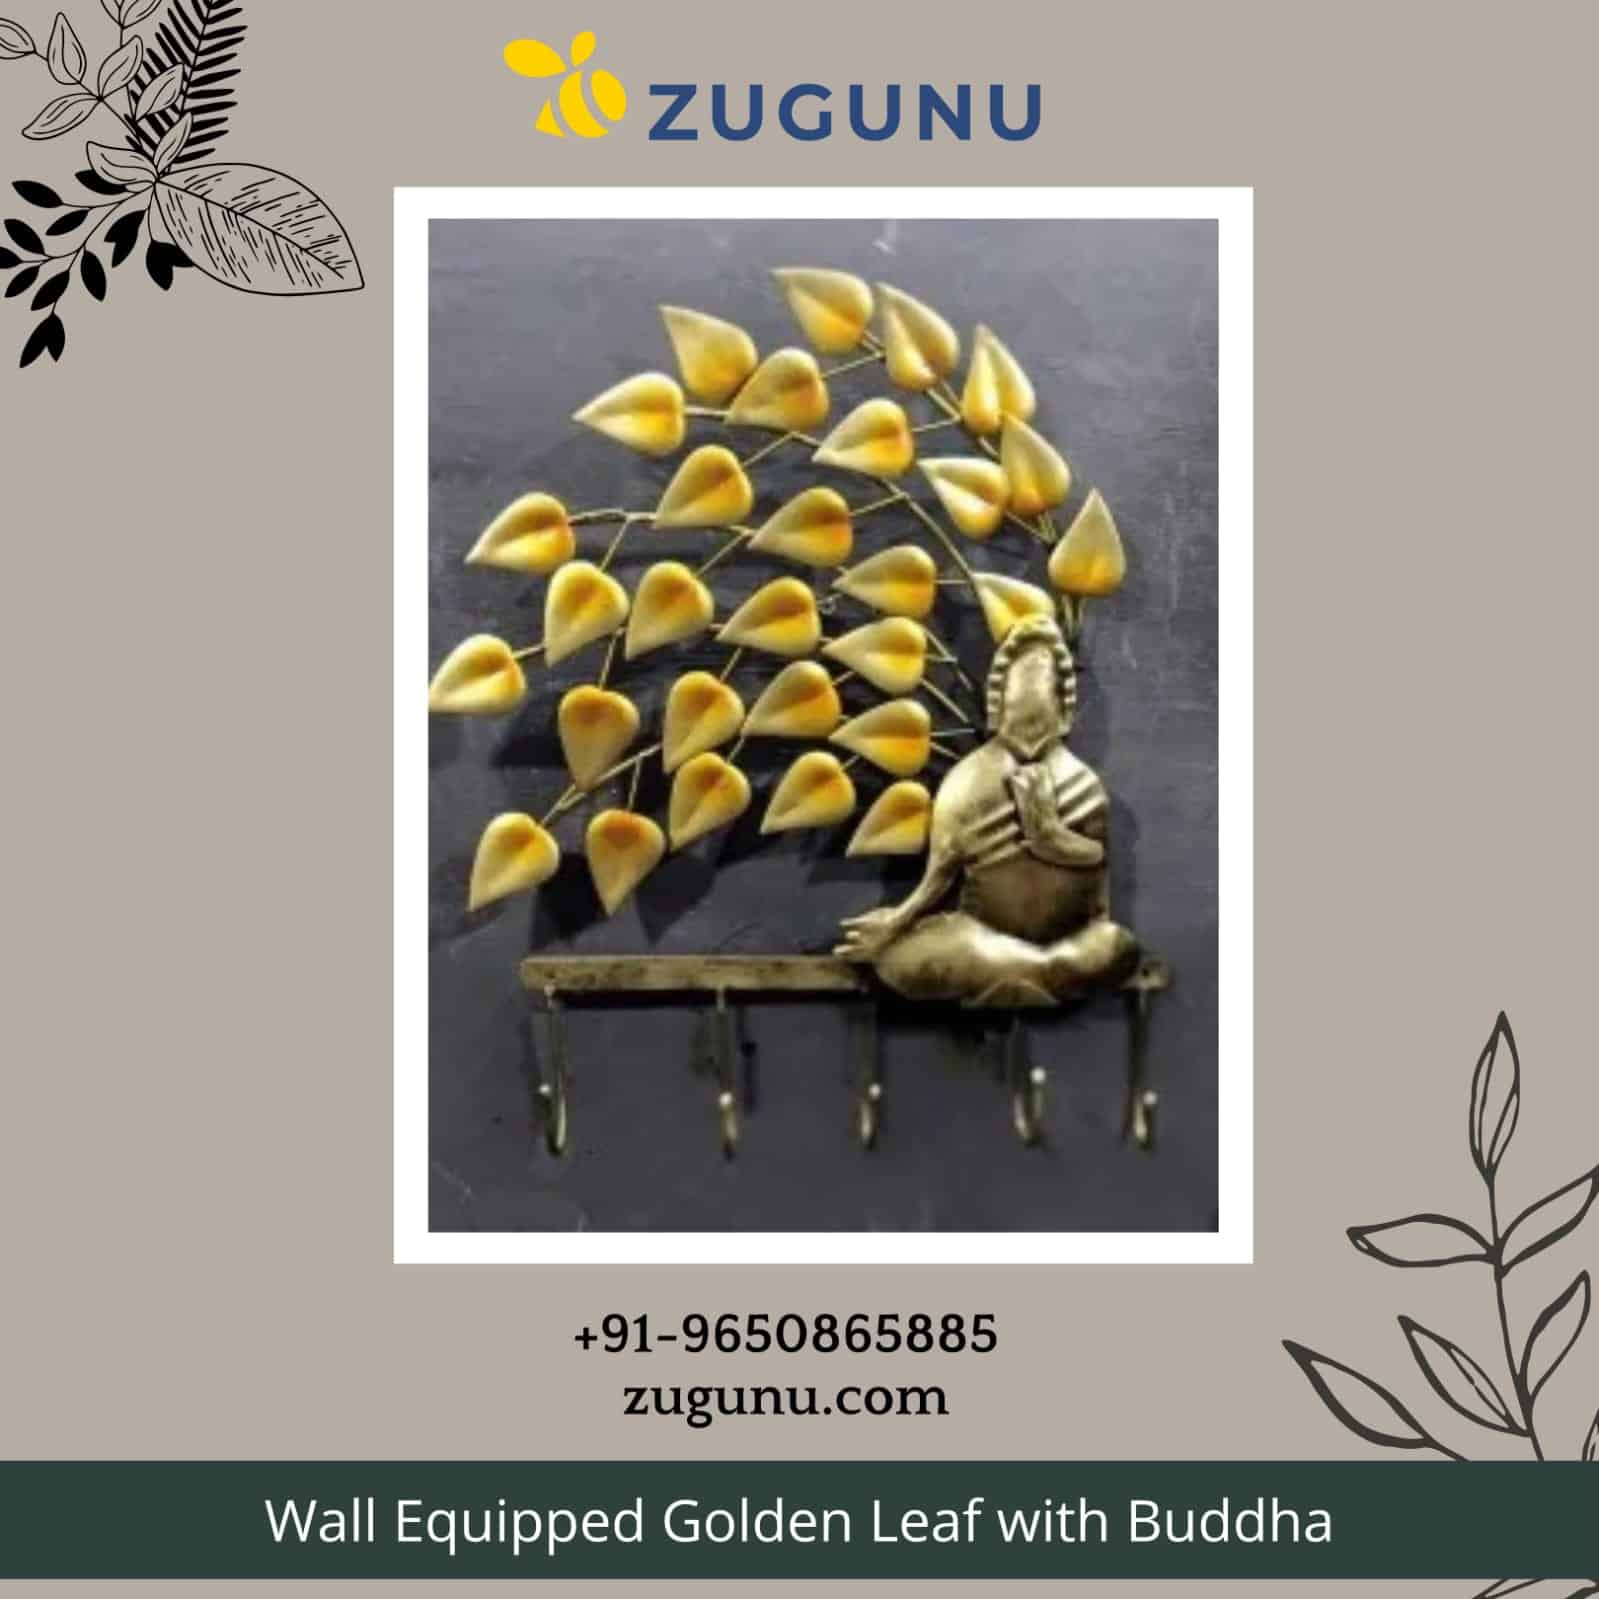 Best Wall Equipped Golden Leaf With Buddha Zugunu